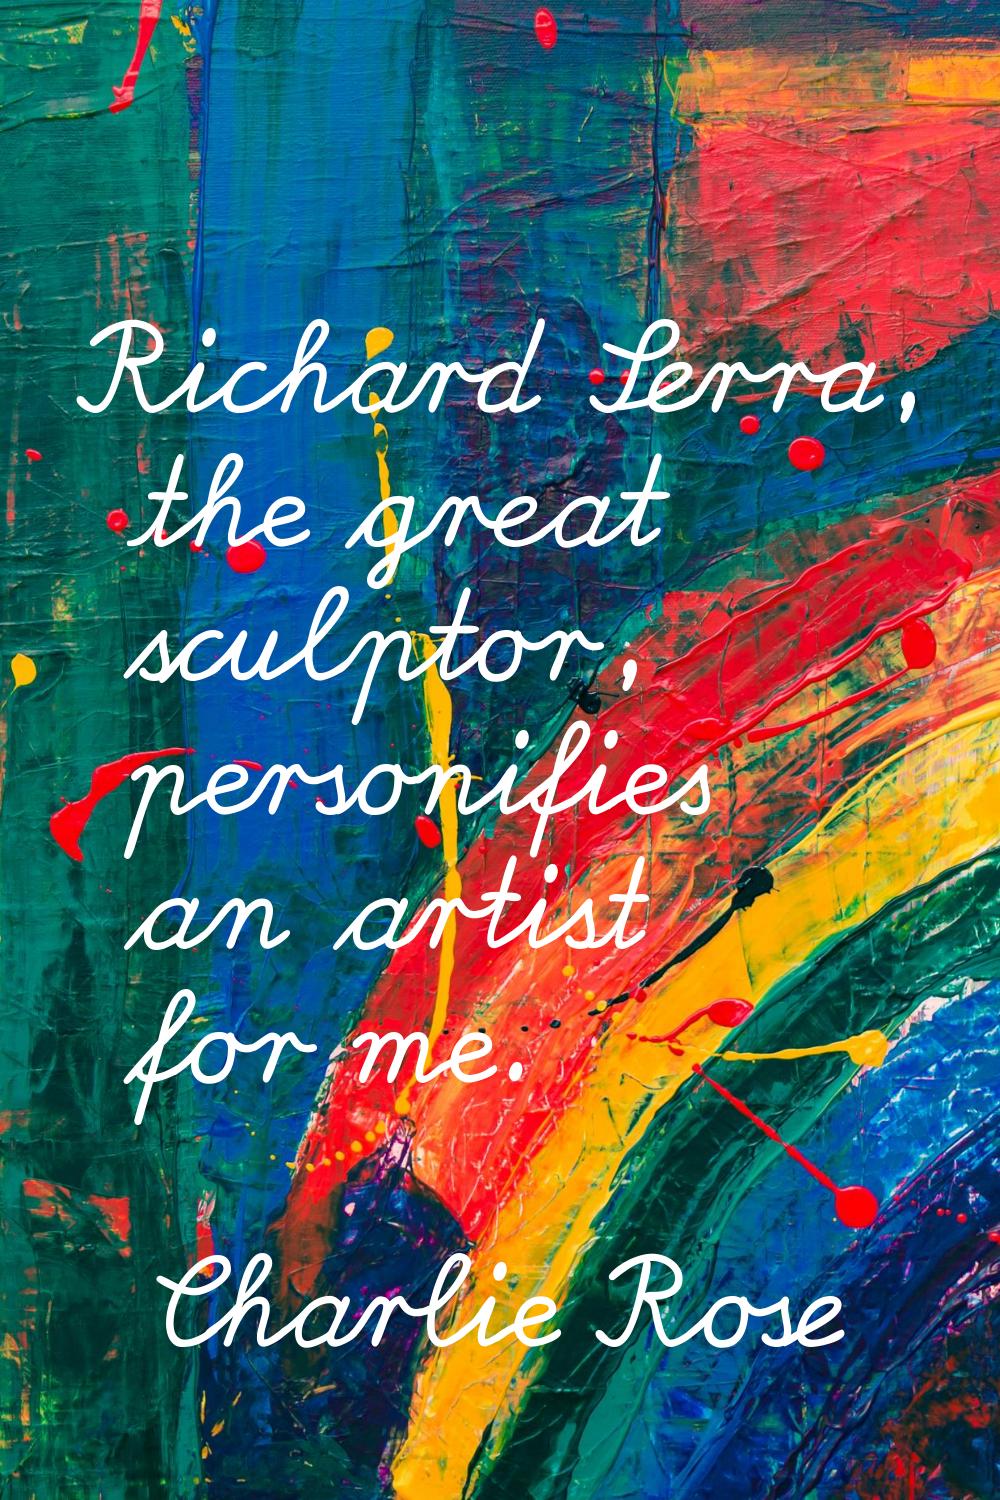 Richard Serra, the great sculptor, personifies an artist for me.